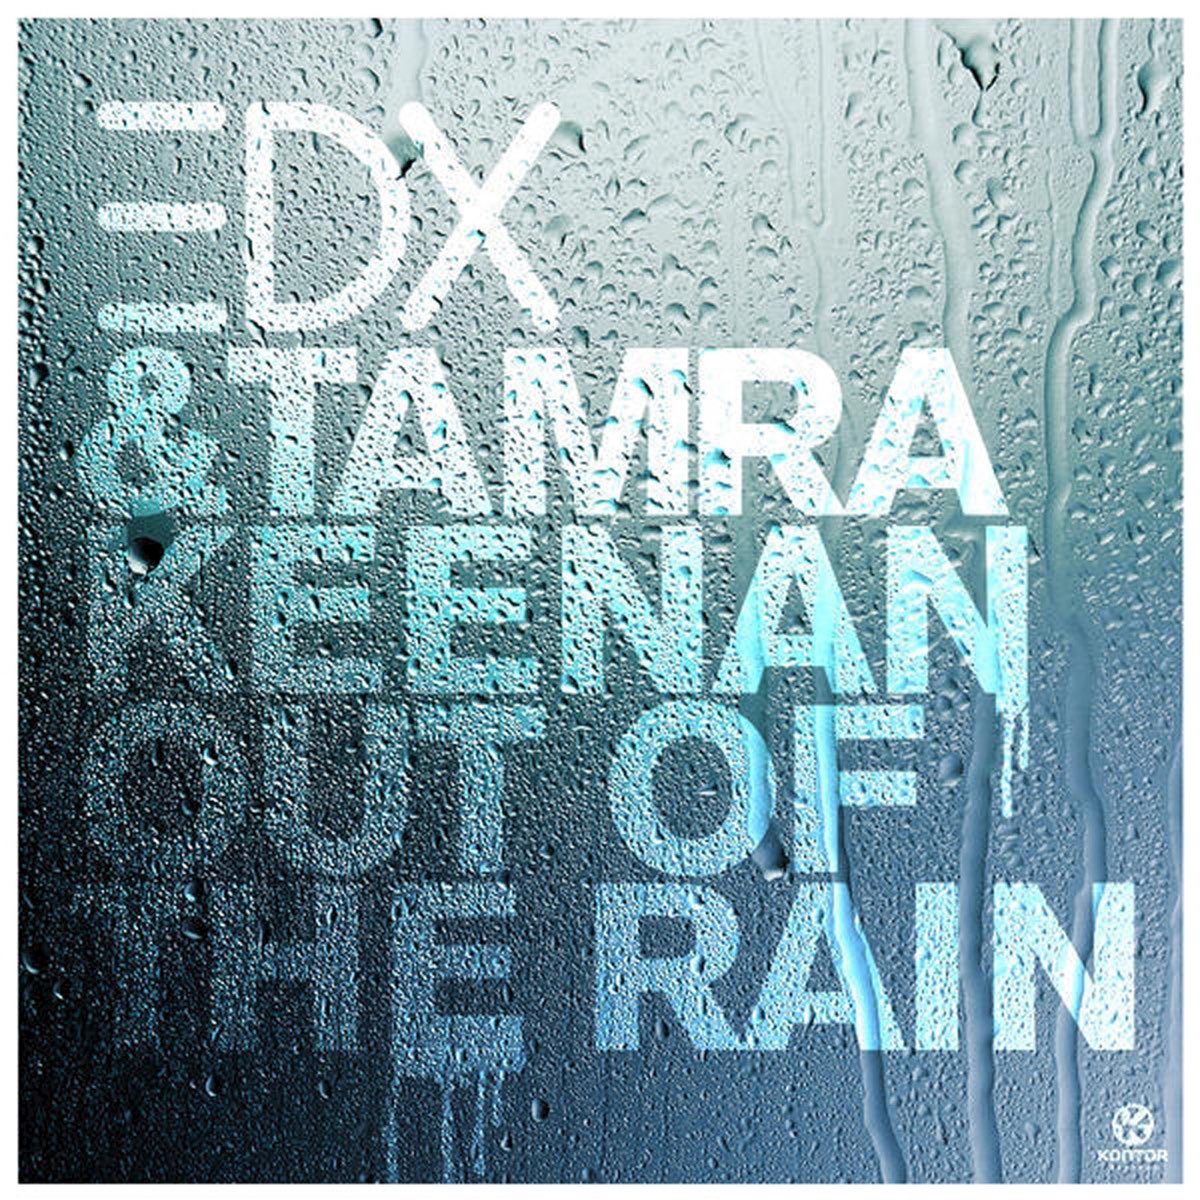 The Rain Remix. Rain out. EDX & Tamra Keenan - out of the Rain (Sebastian Krieg Remix). The Rain (feat. Greenspree). Rain out now